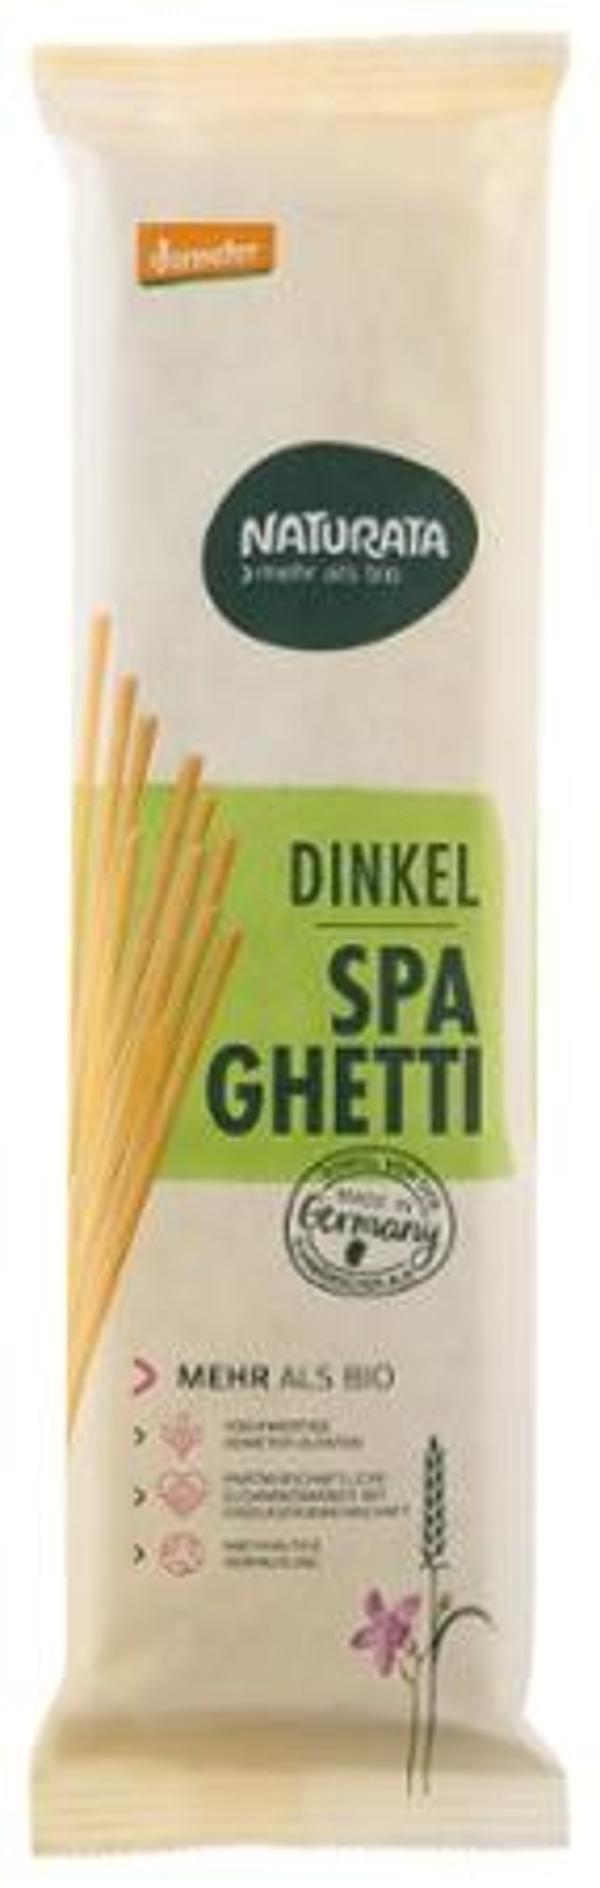 Produktfoto zu Dinkel Spaghetti hell